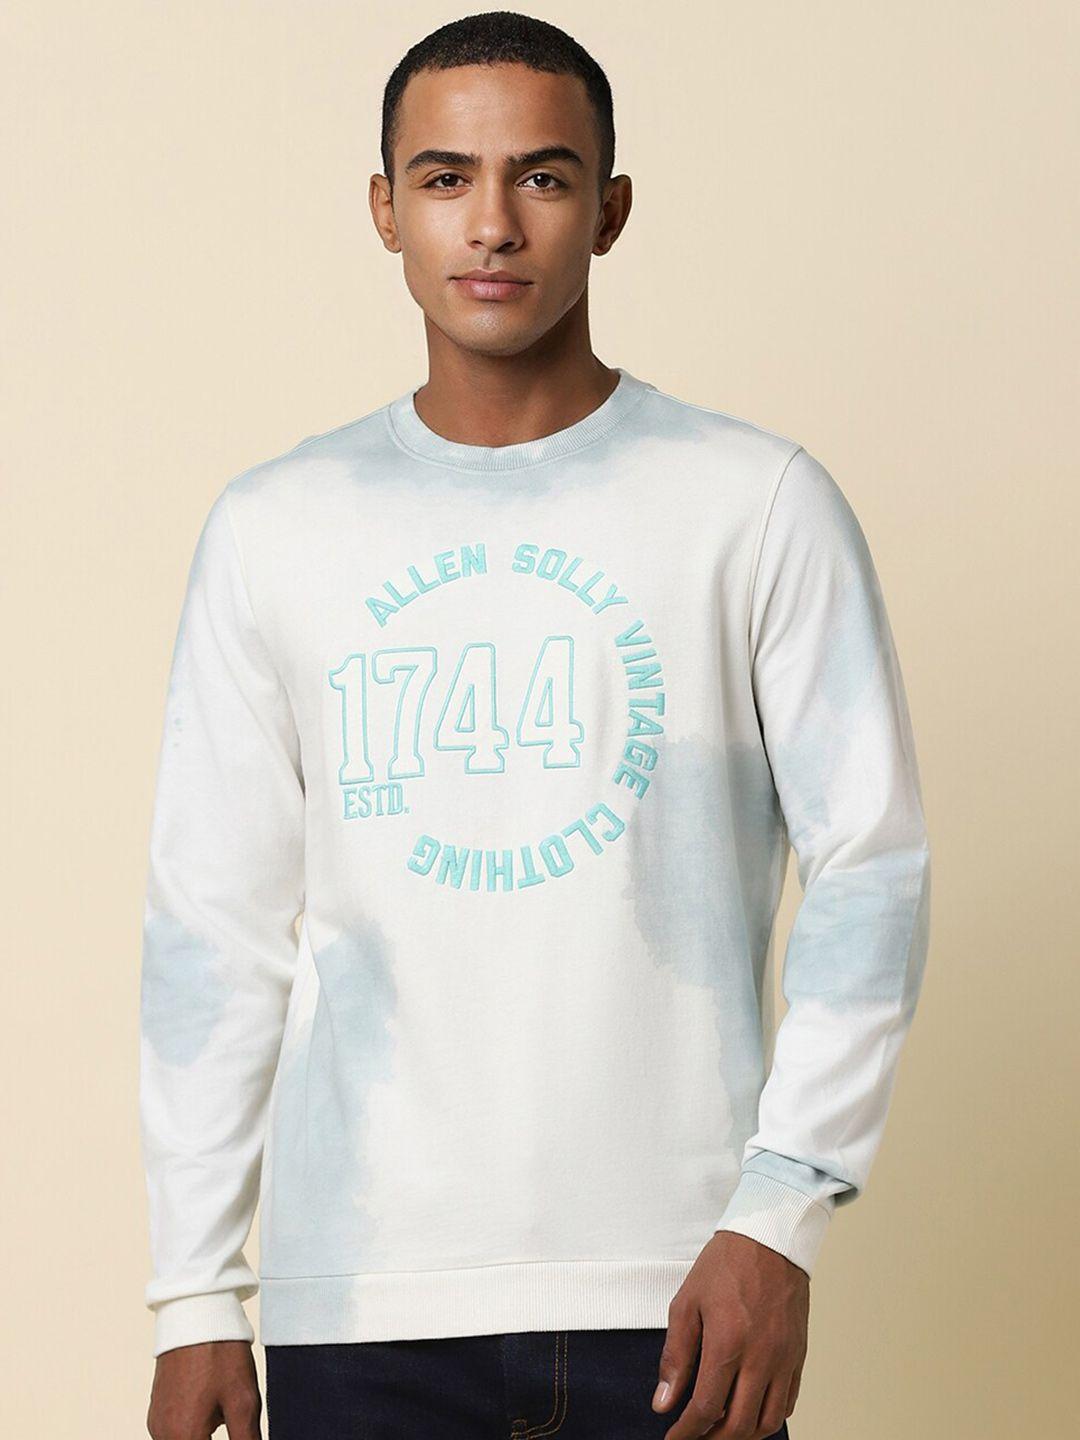 allen solly brand logo embroidered pullover sweatshirt